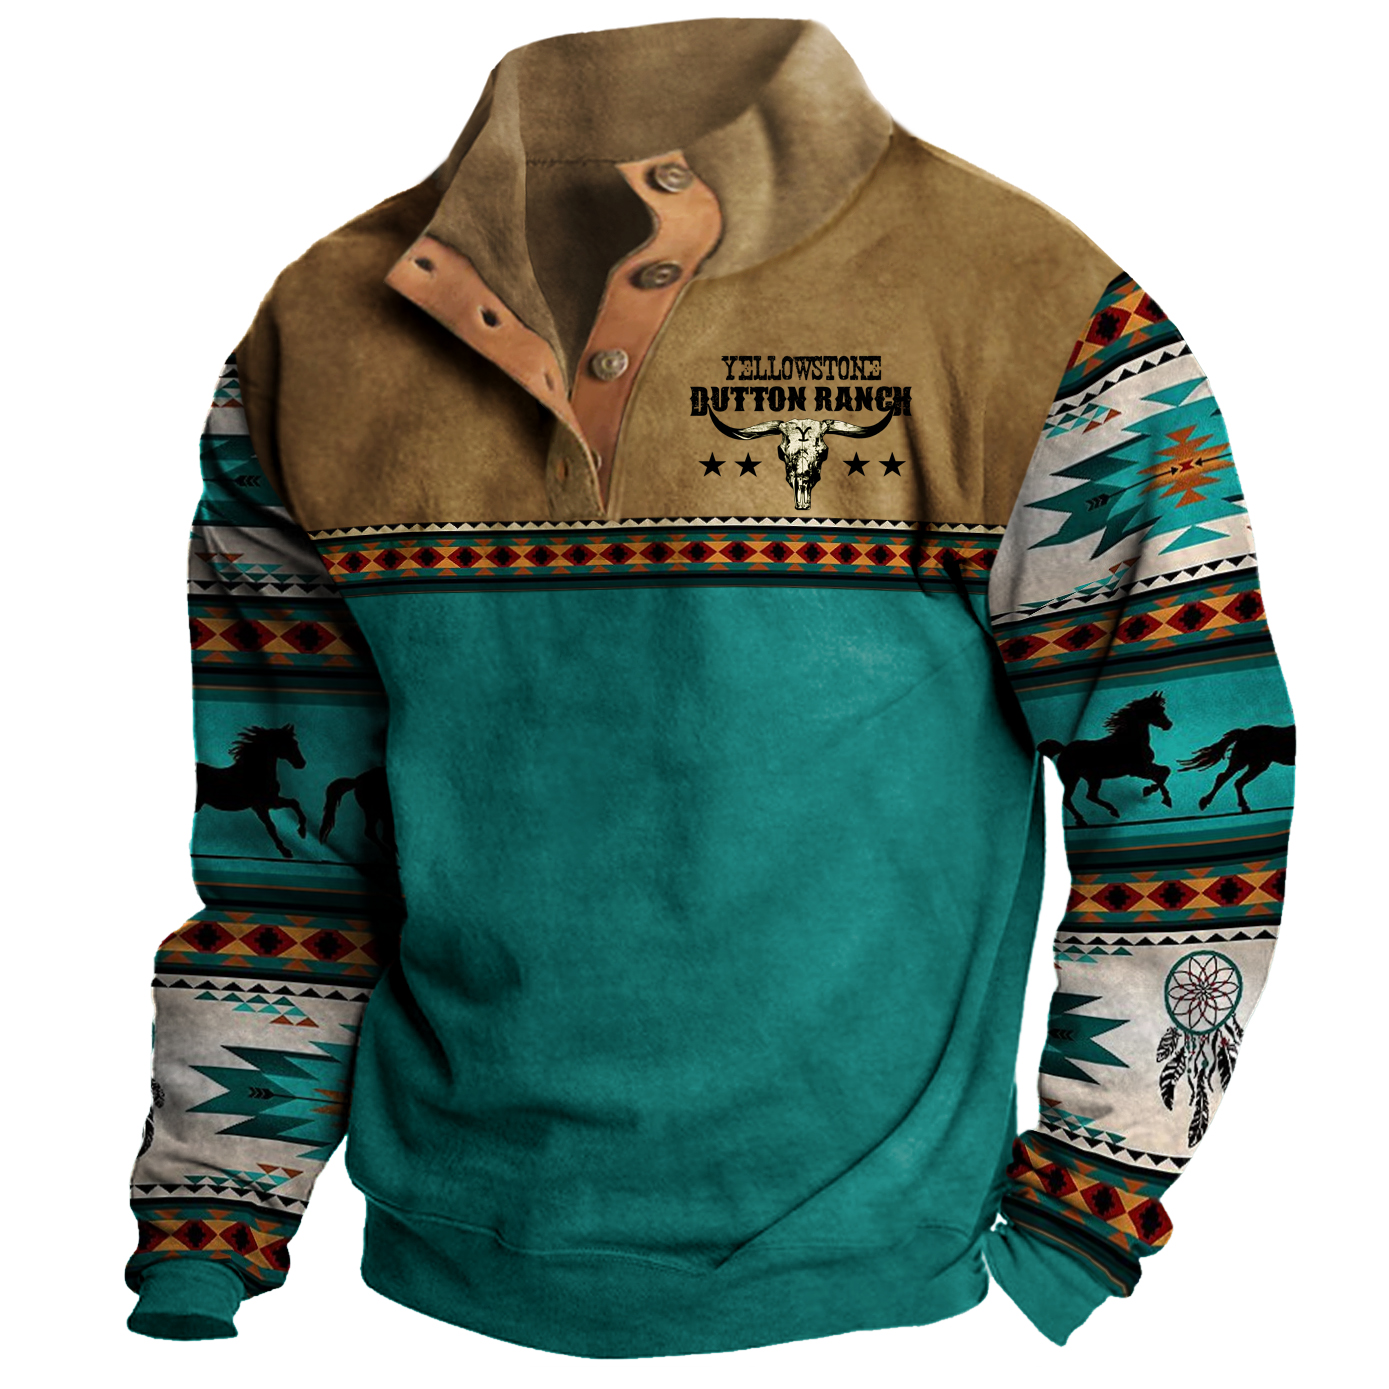 Men's Vintage Western Yellowstone Chic Colorblock Zipper Stand Collar Sweatshirt